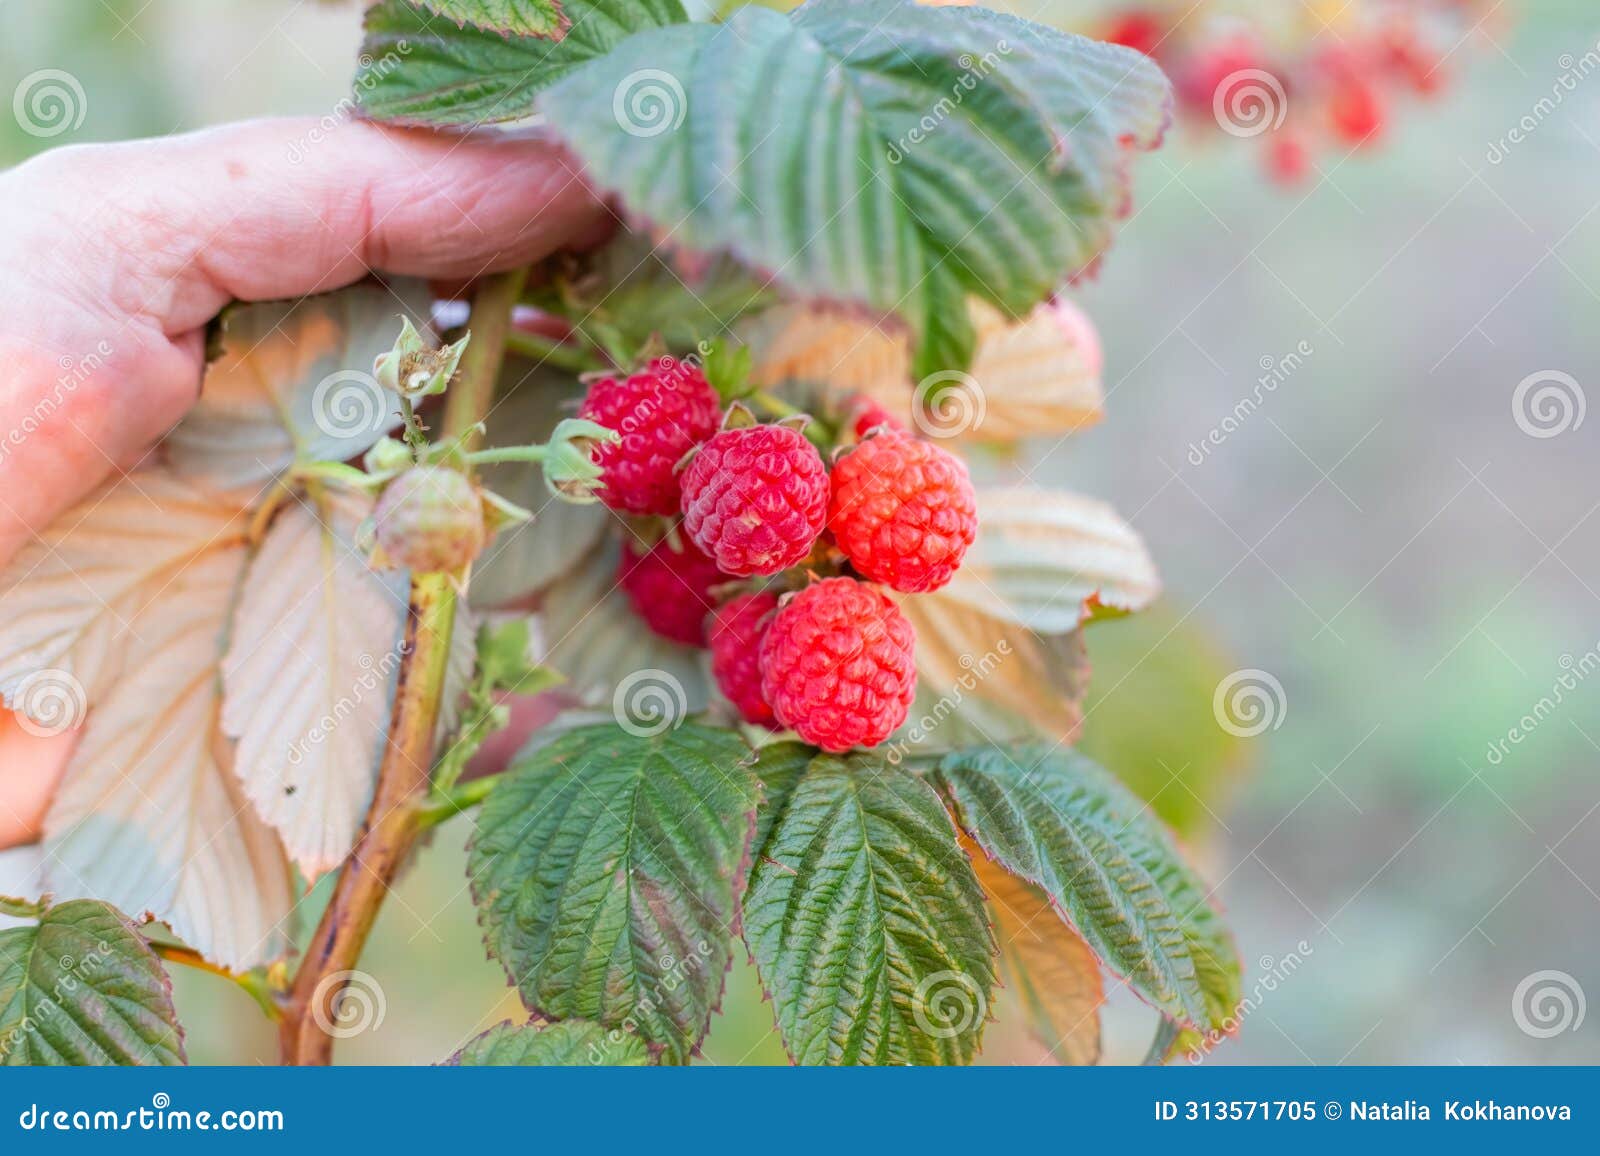 a woman examines the fruits of ripe maravilla raspberries on a bush. large varieties of raspberries grow on the farm